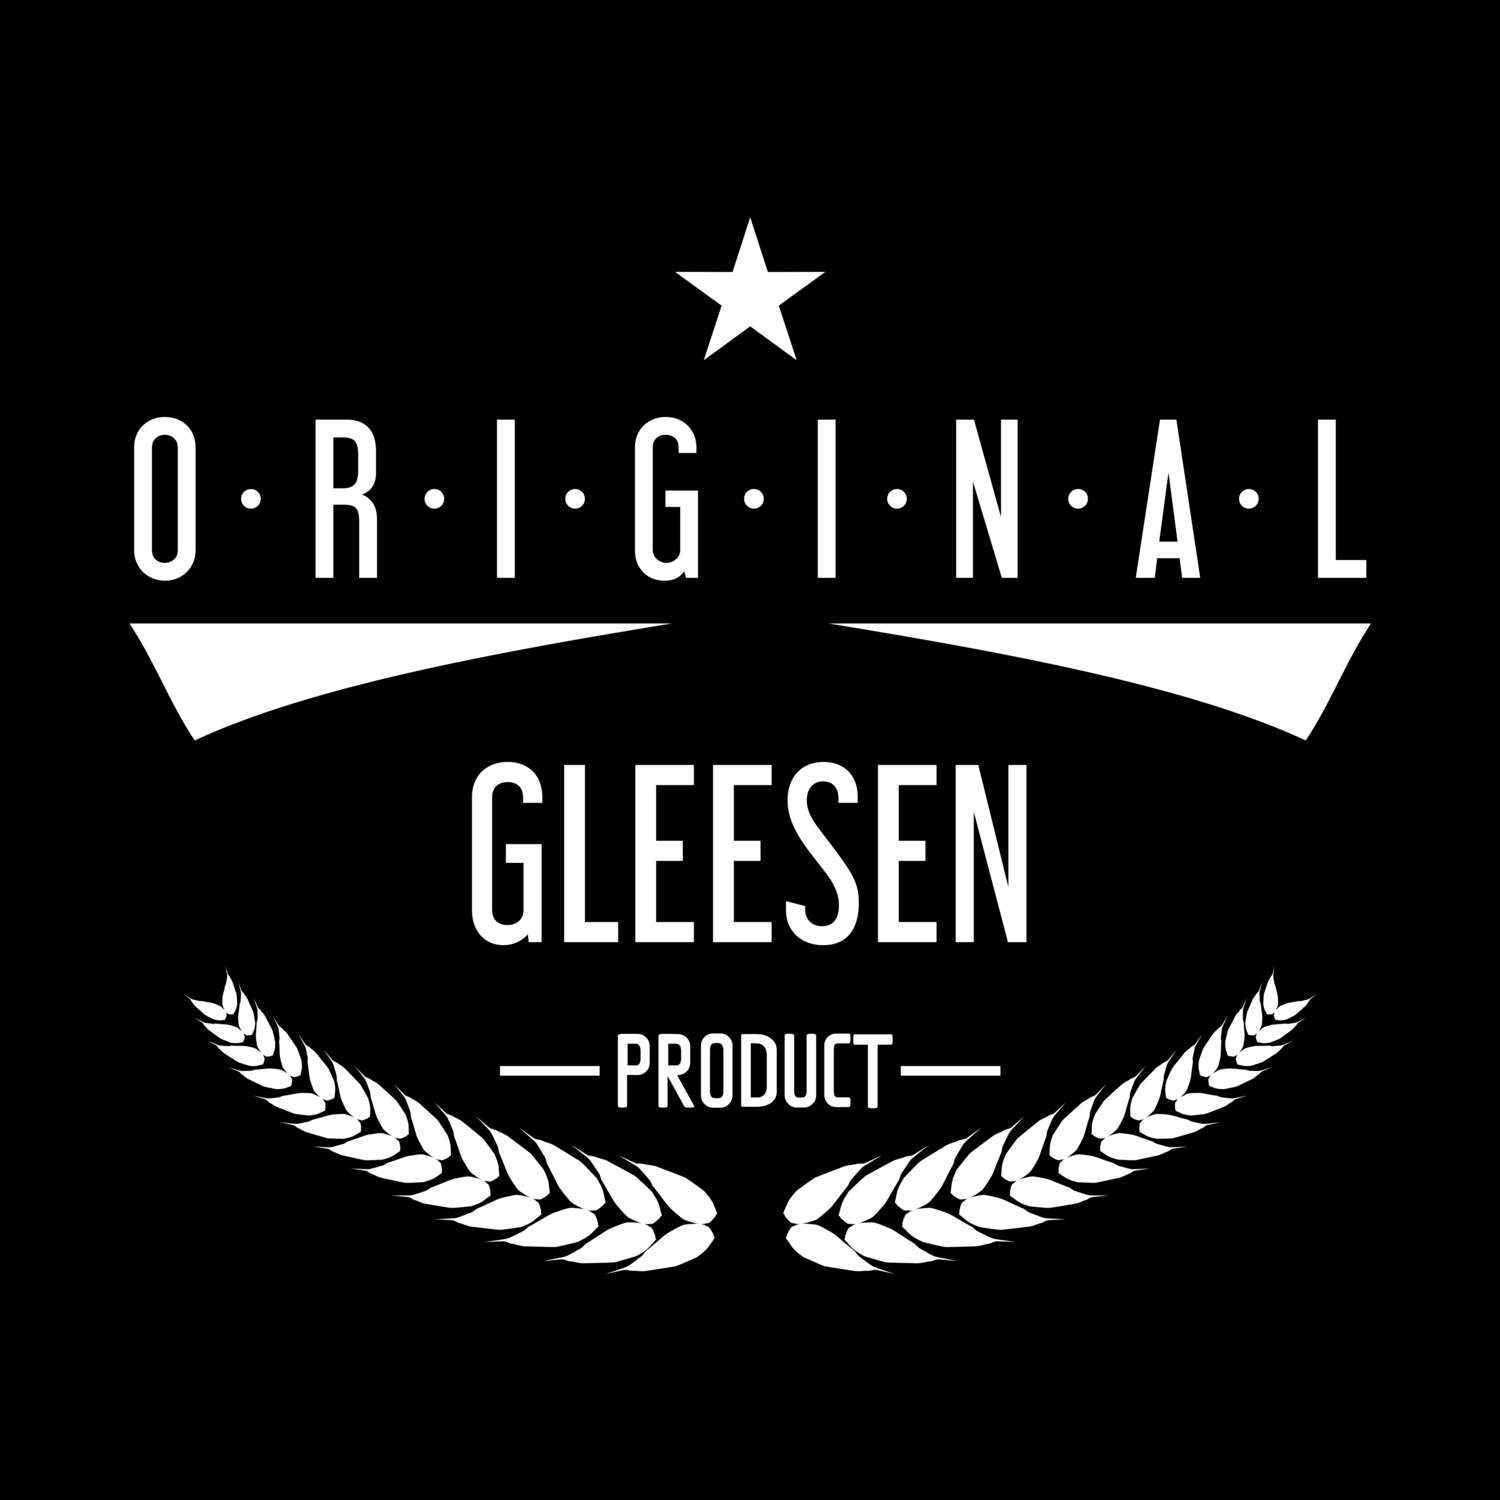 Gleesen T-Shirt »Original Product«